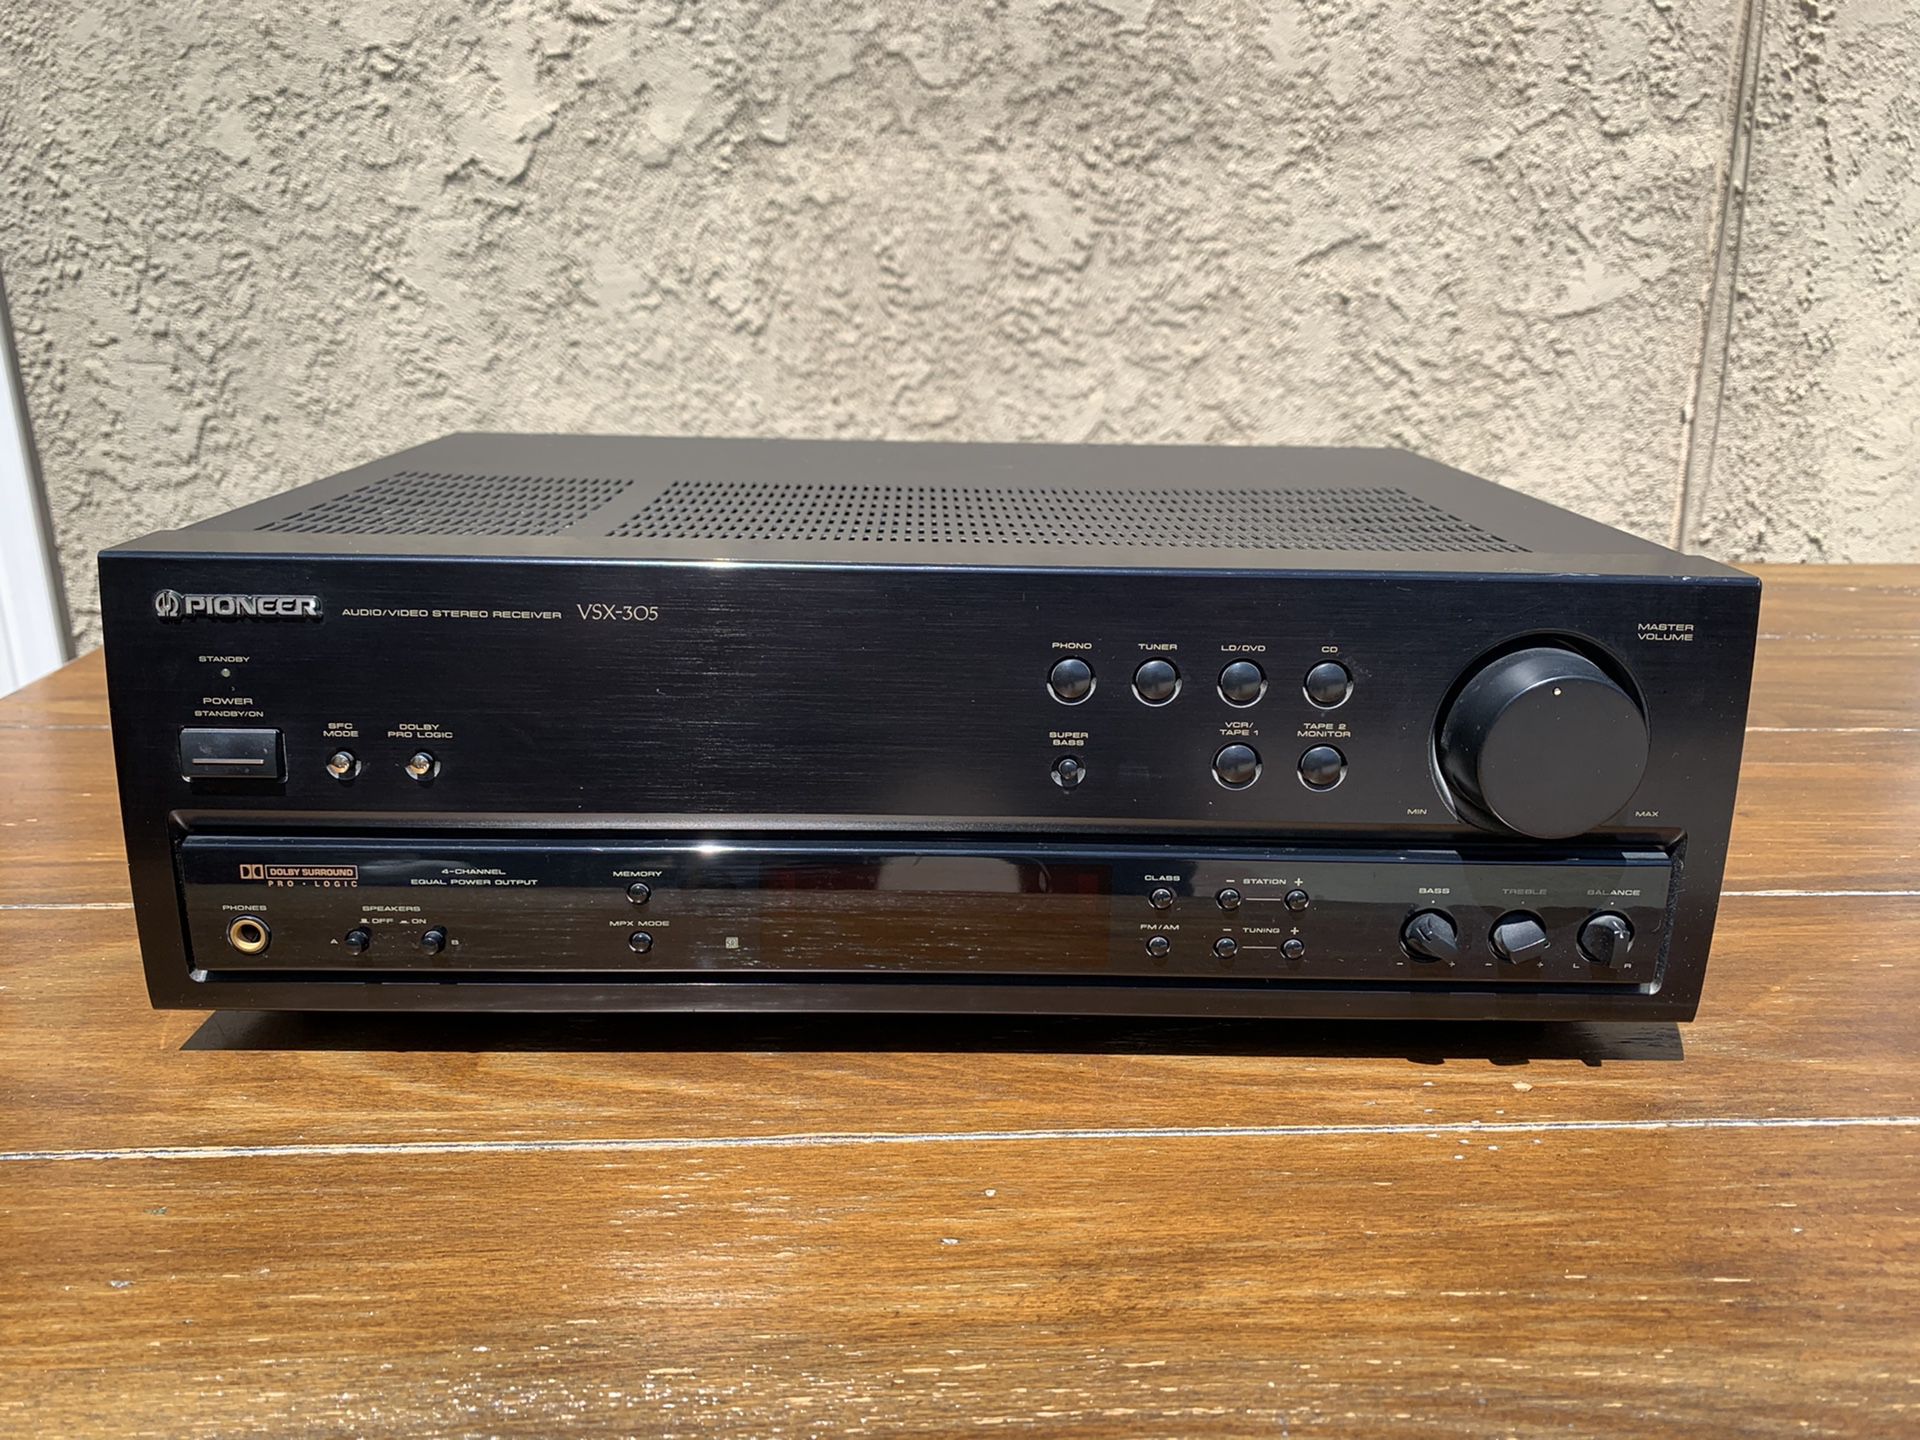 Pioneer Audio/Video Home Theater Stereo Reciever VSX-305 - 185w